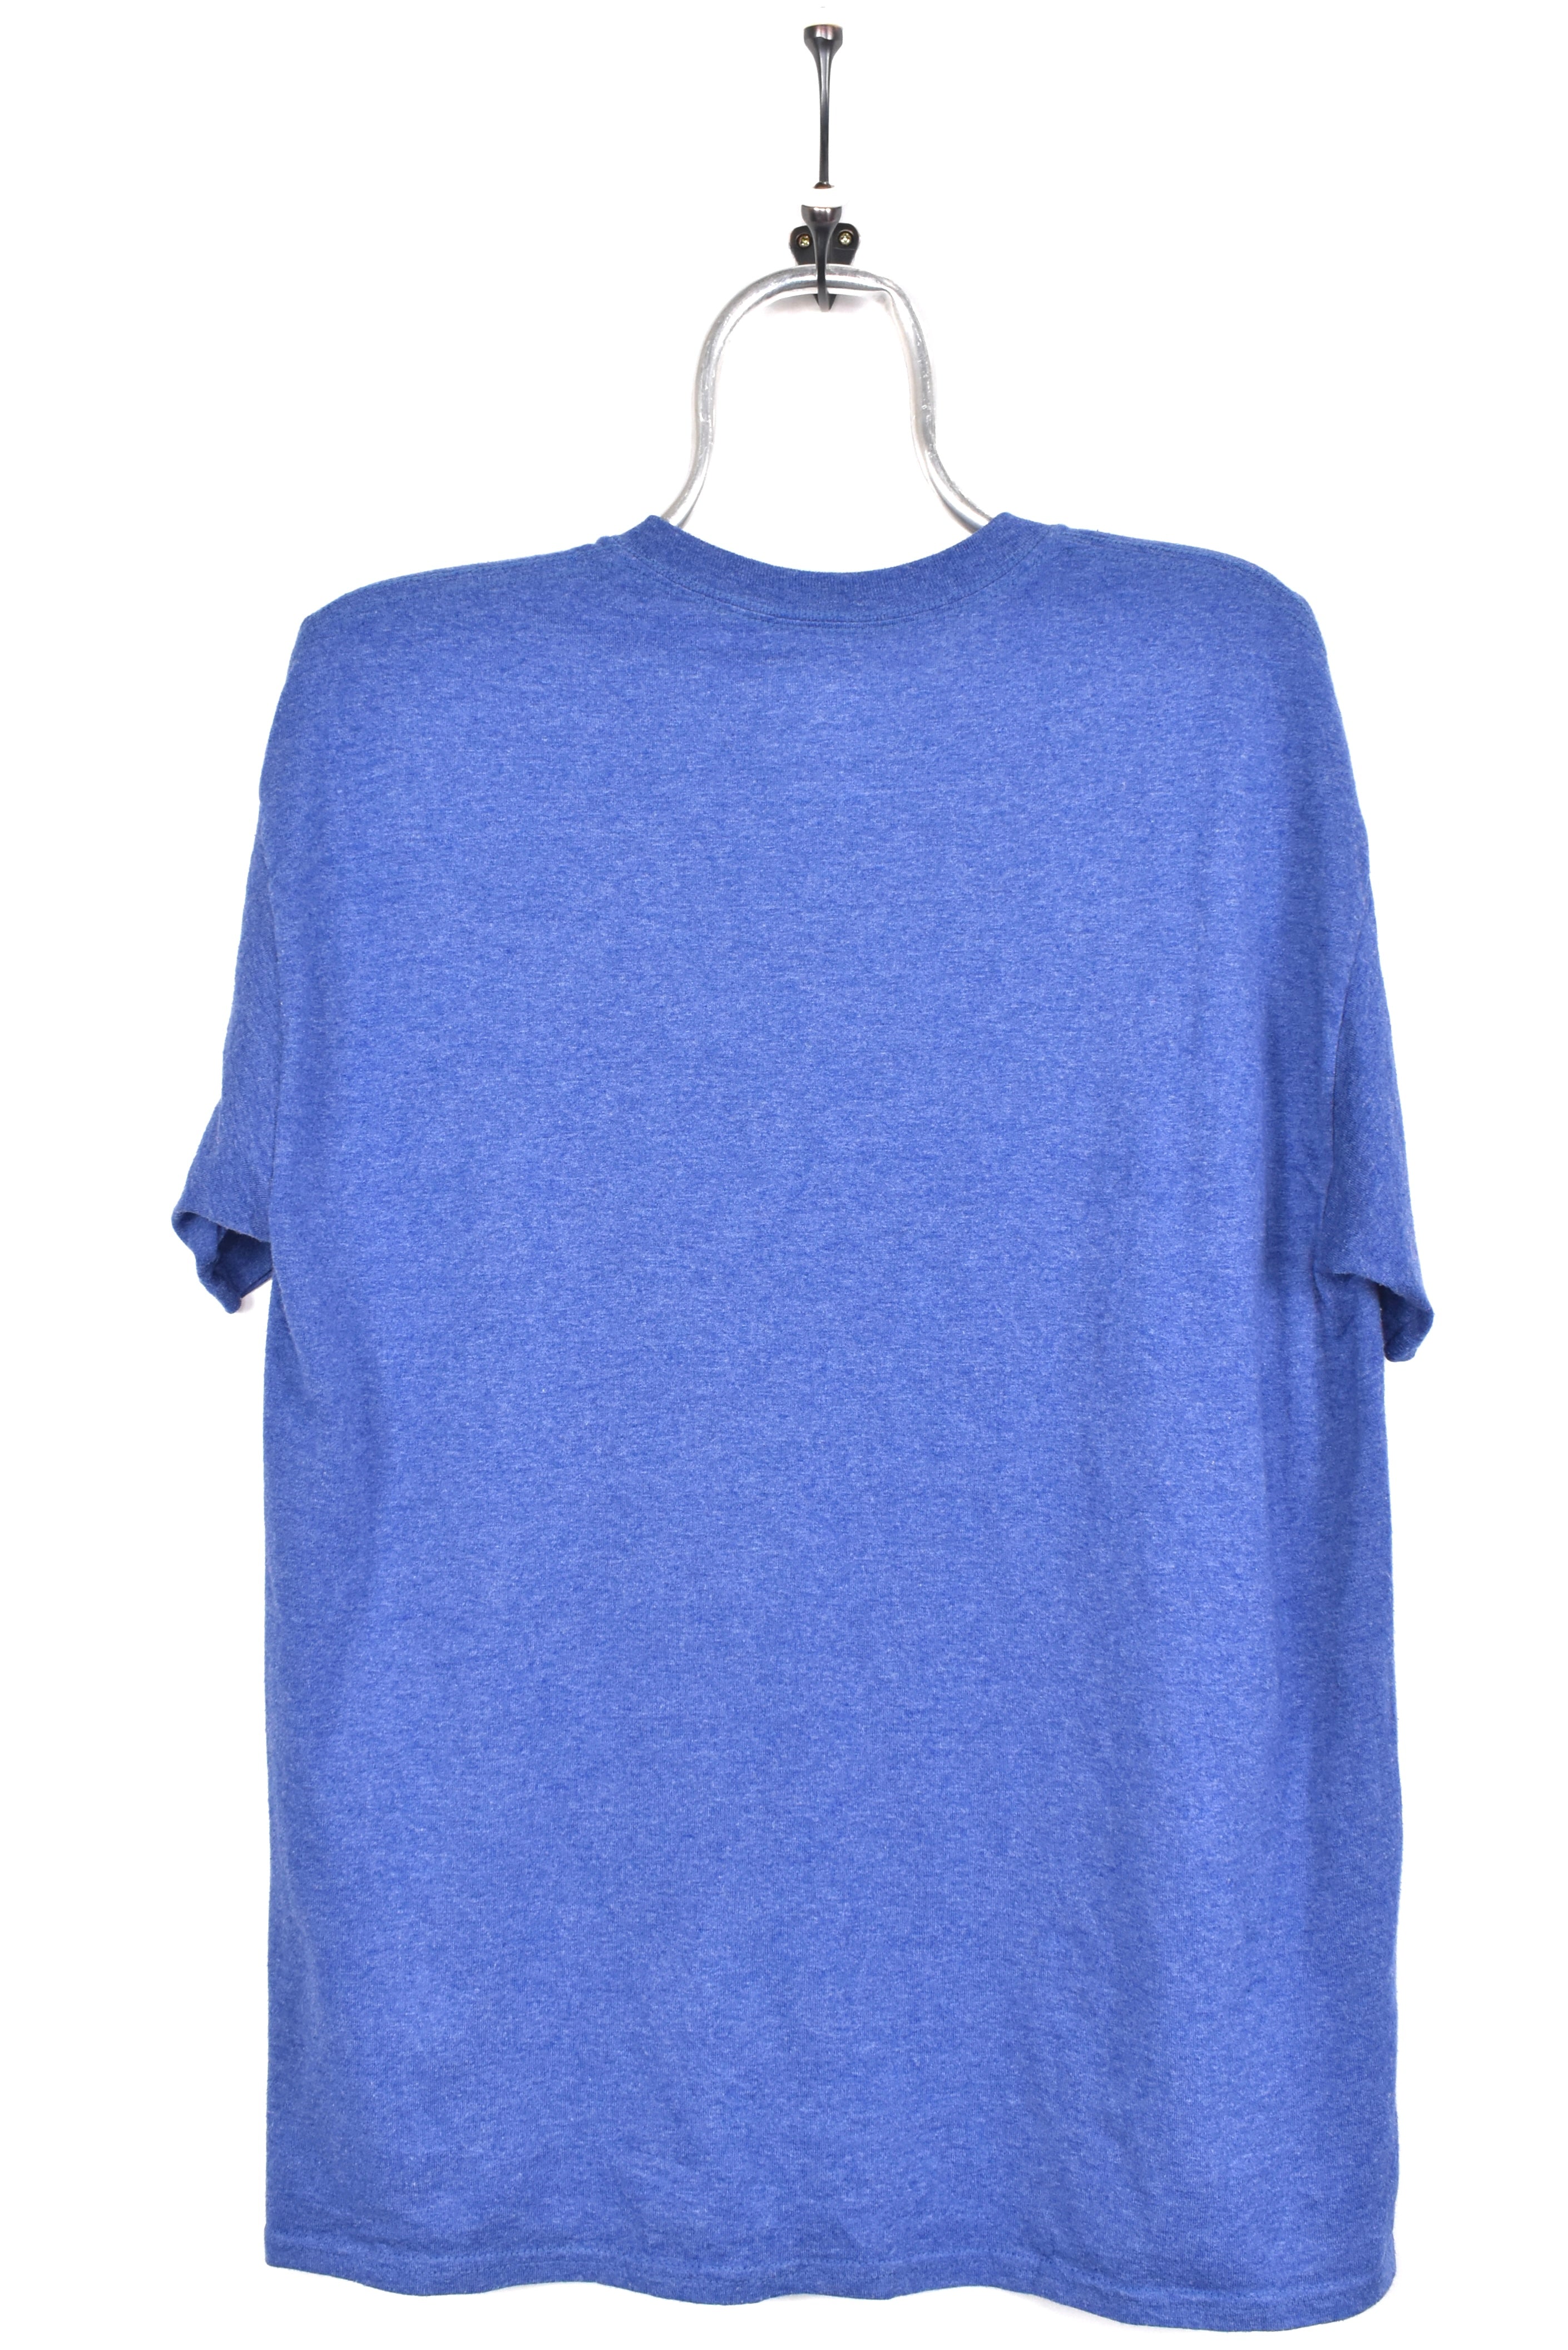 Modern Milwaukee Brewers shirt, MLB blue graphic tee - AU Large PRO SPORT